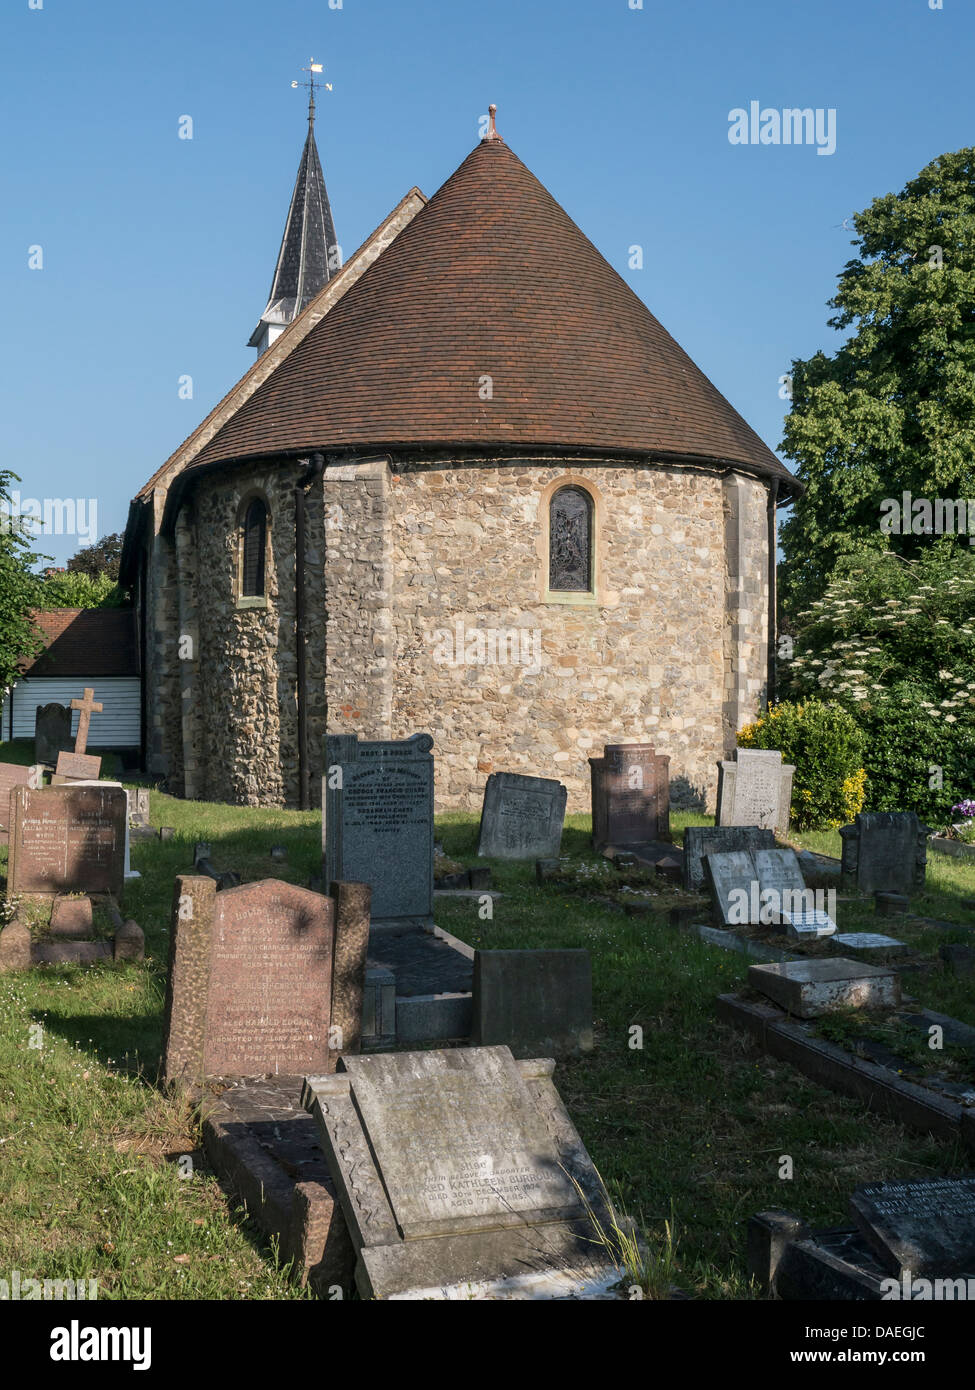 HADLEIGH, ESSEX, UK - JULY 06, 2018: St James the Less Parish Church, Hadleigh, Essex Stock Photo